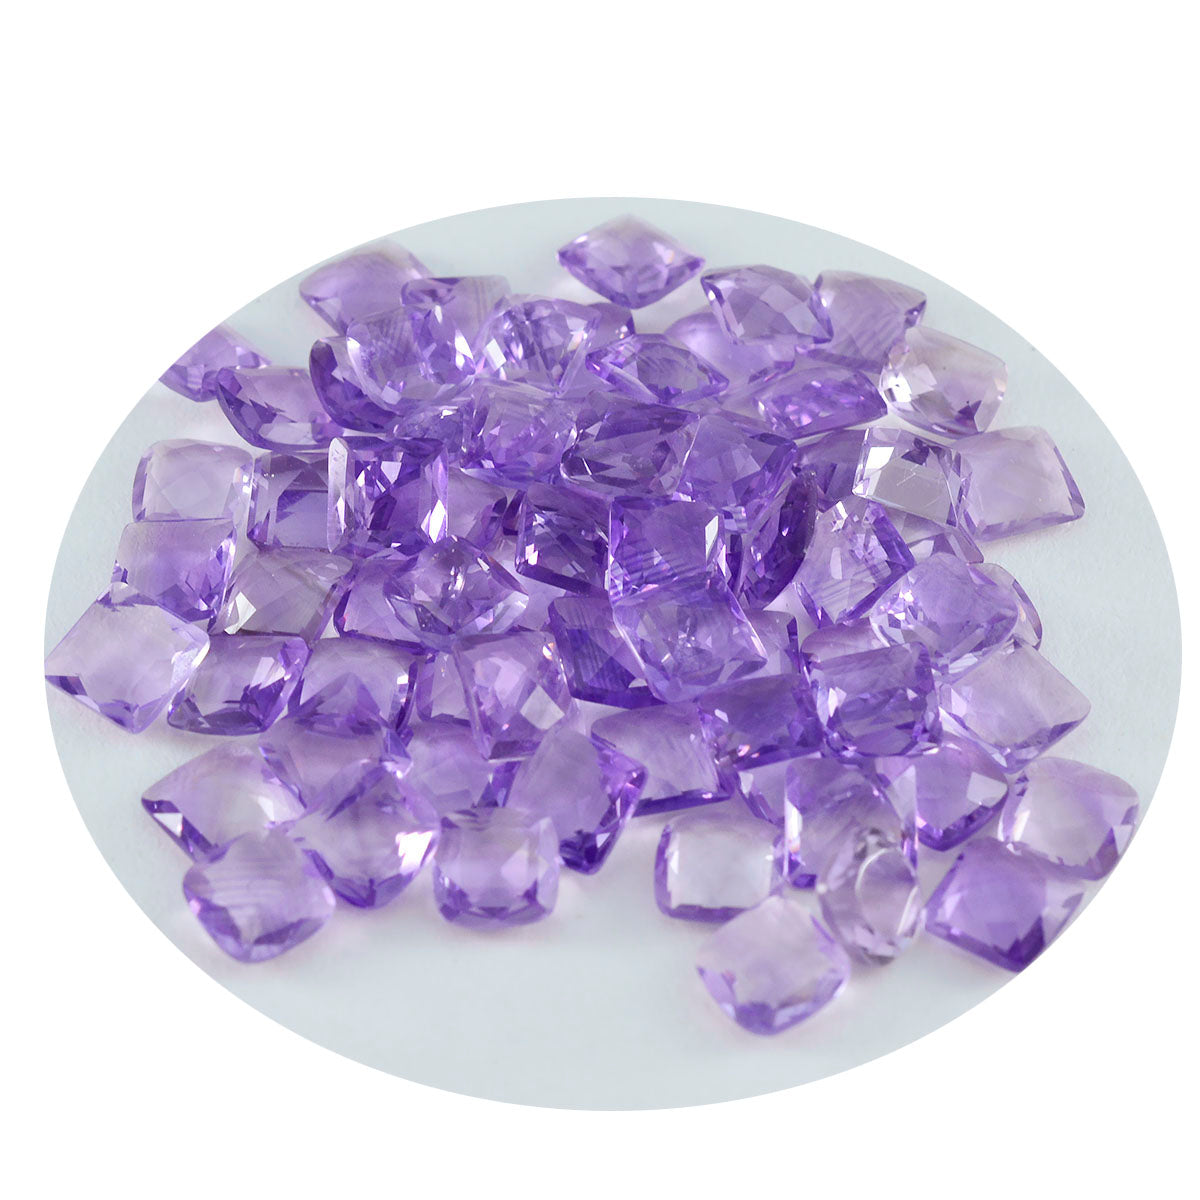 Riyogems 1PC Real Purple Amethyst Faceted 6X6 mm Square Shape Good Quality Loose Gemstone